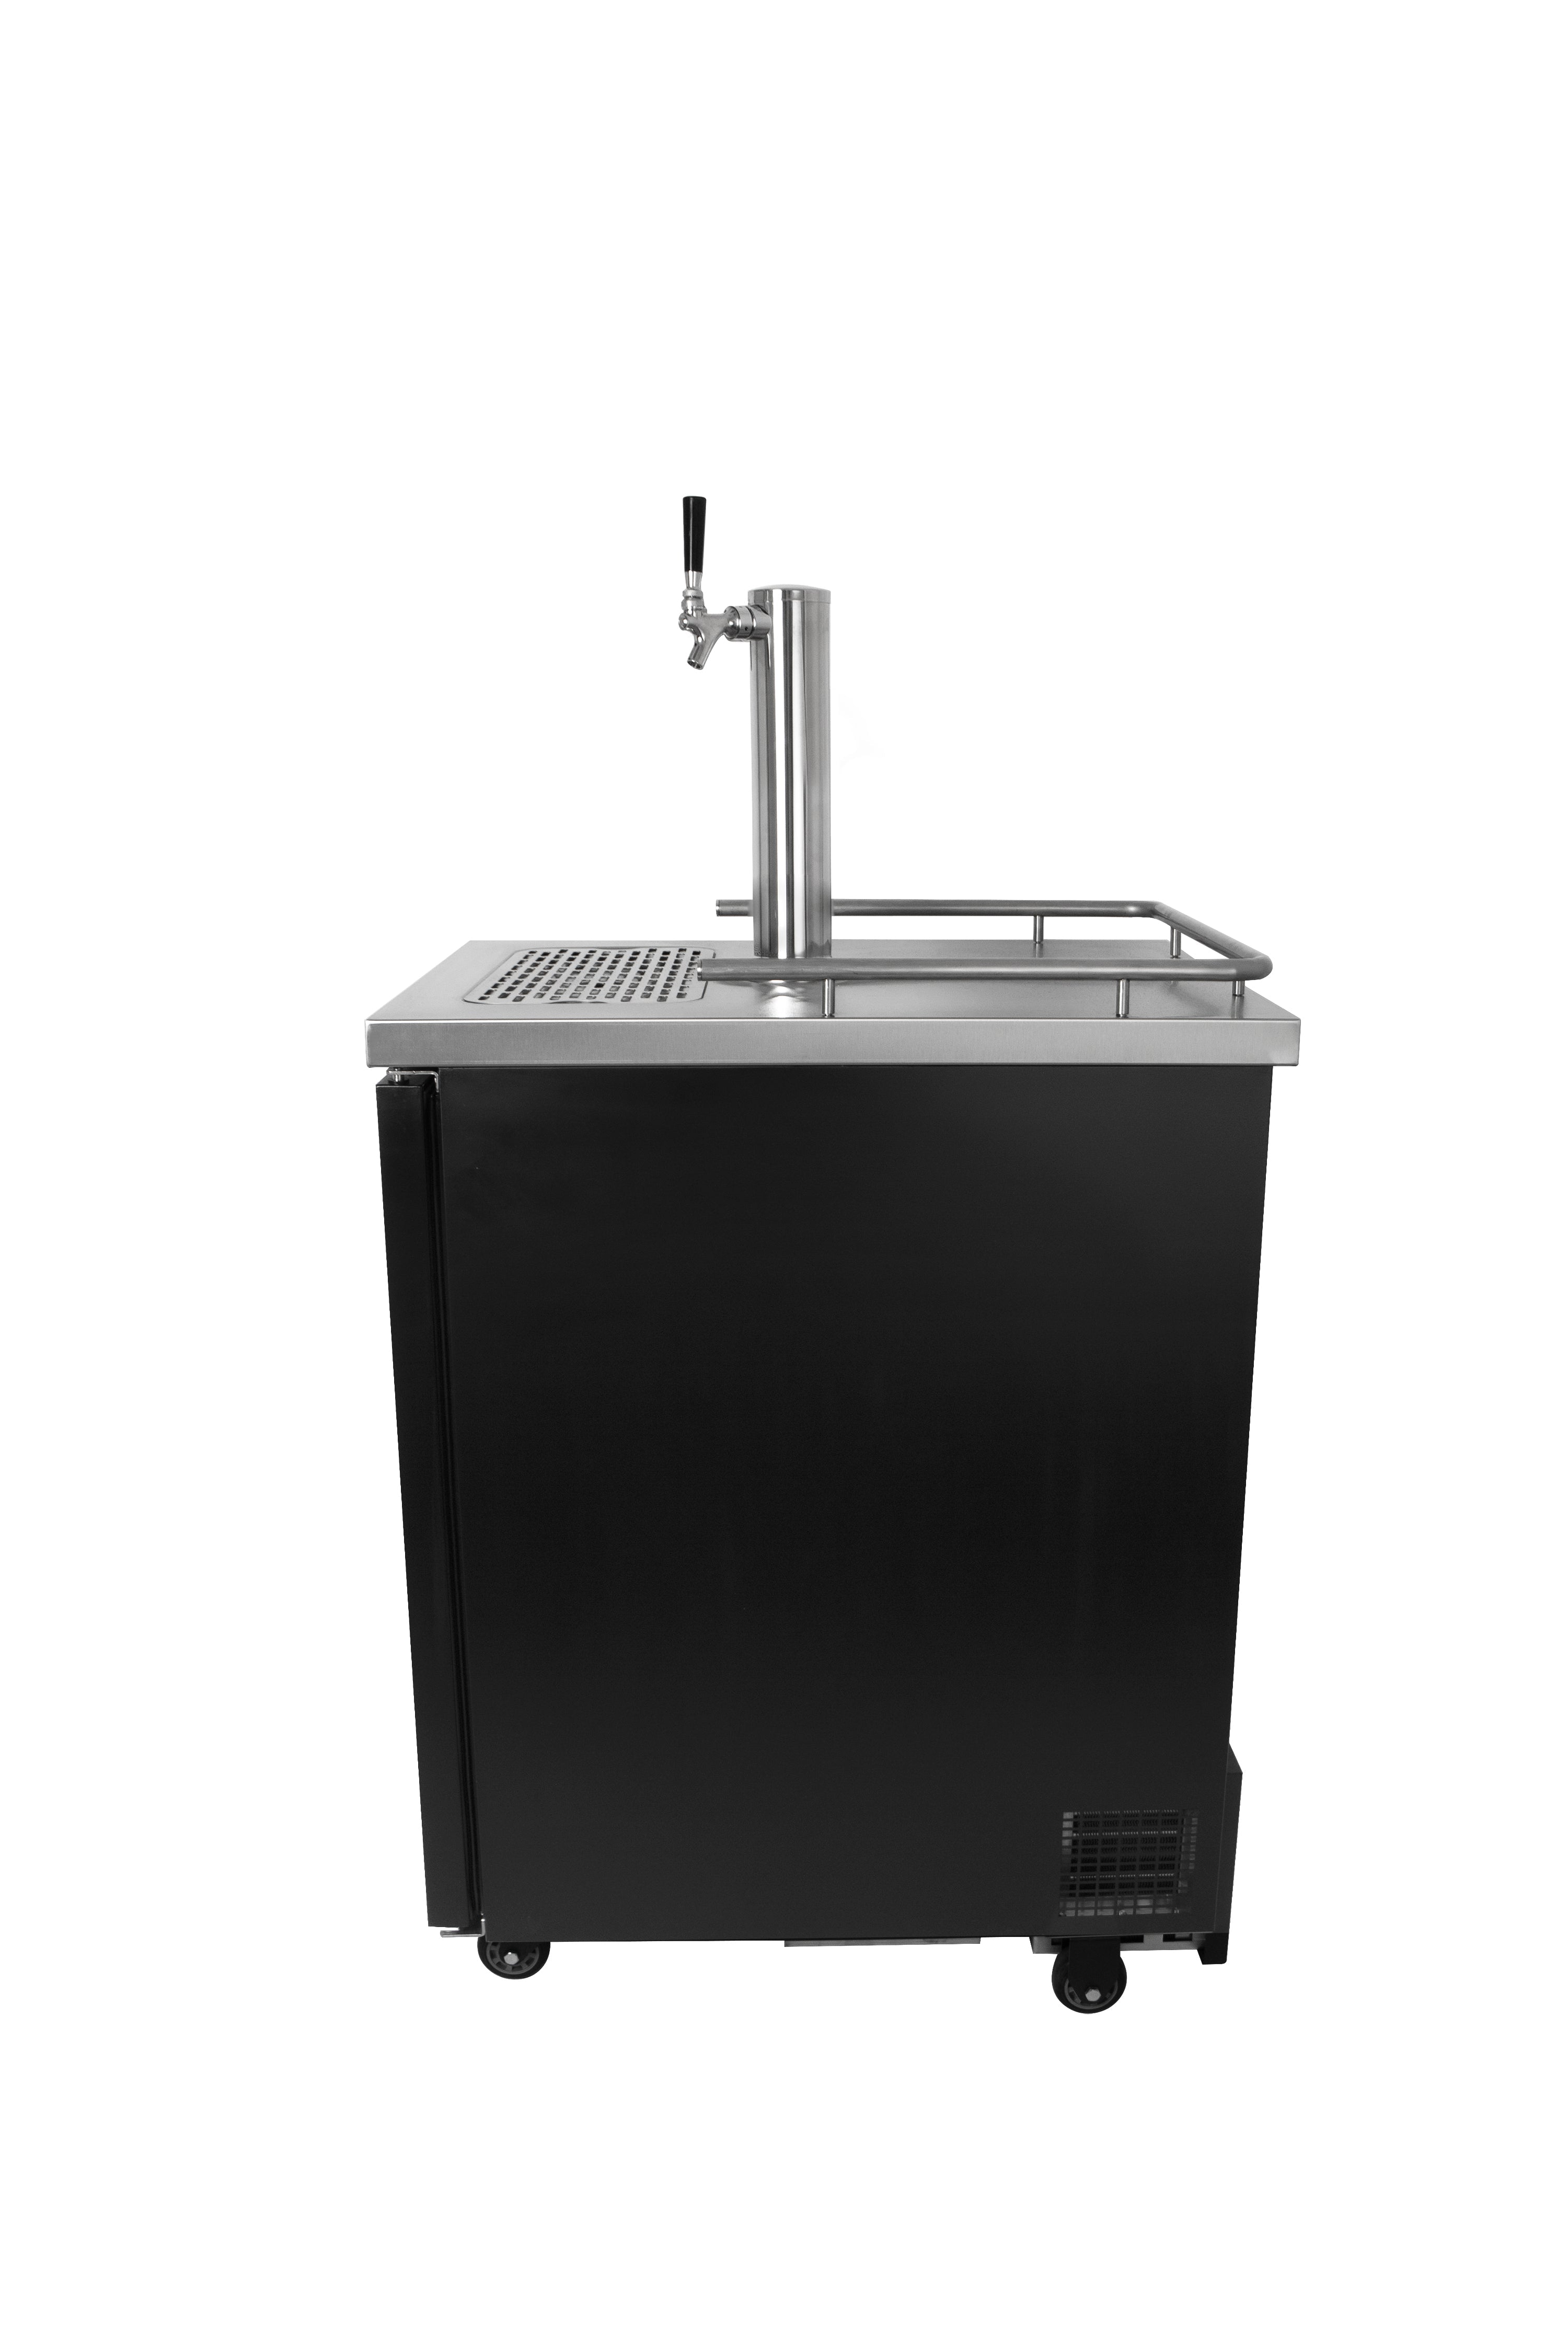 Kegco TCK-1B Commercial Kegerator Single Keg Restaurant Beer Refrigerator - Black